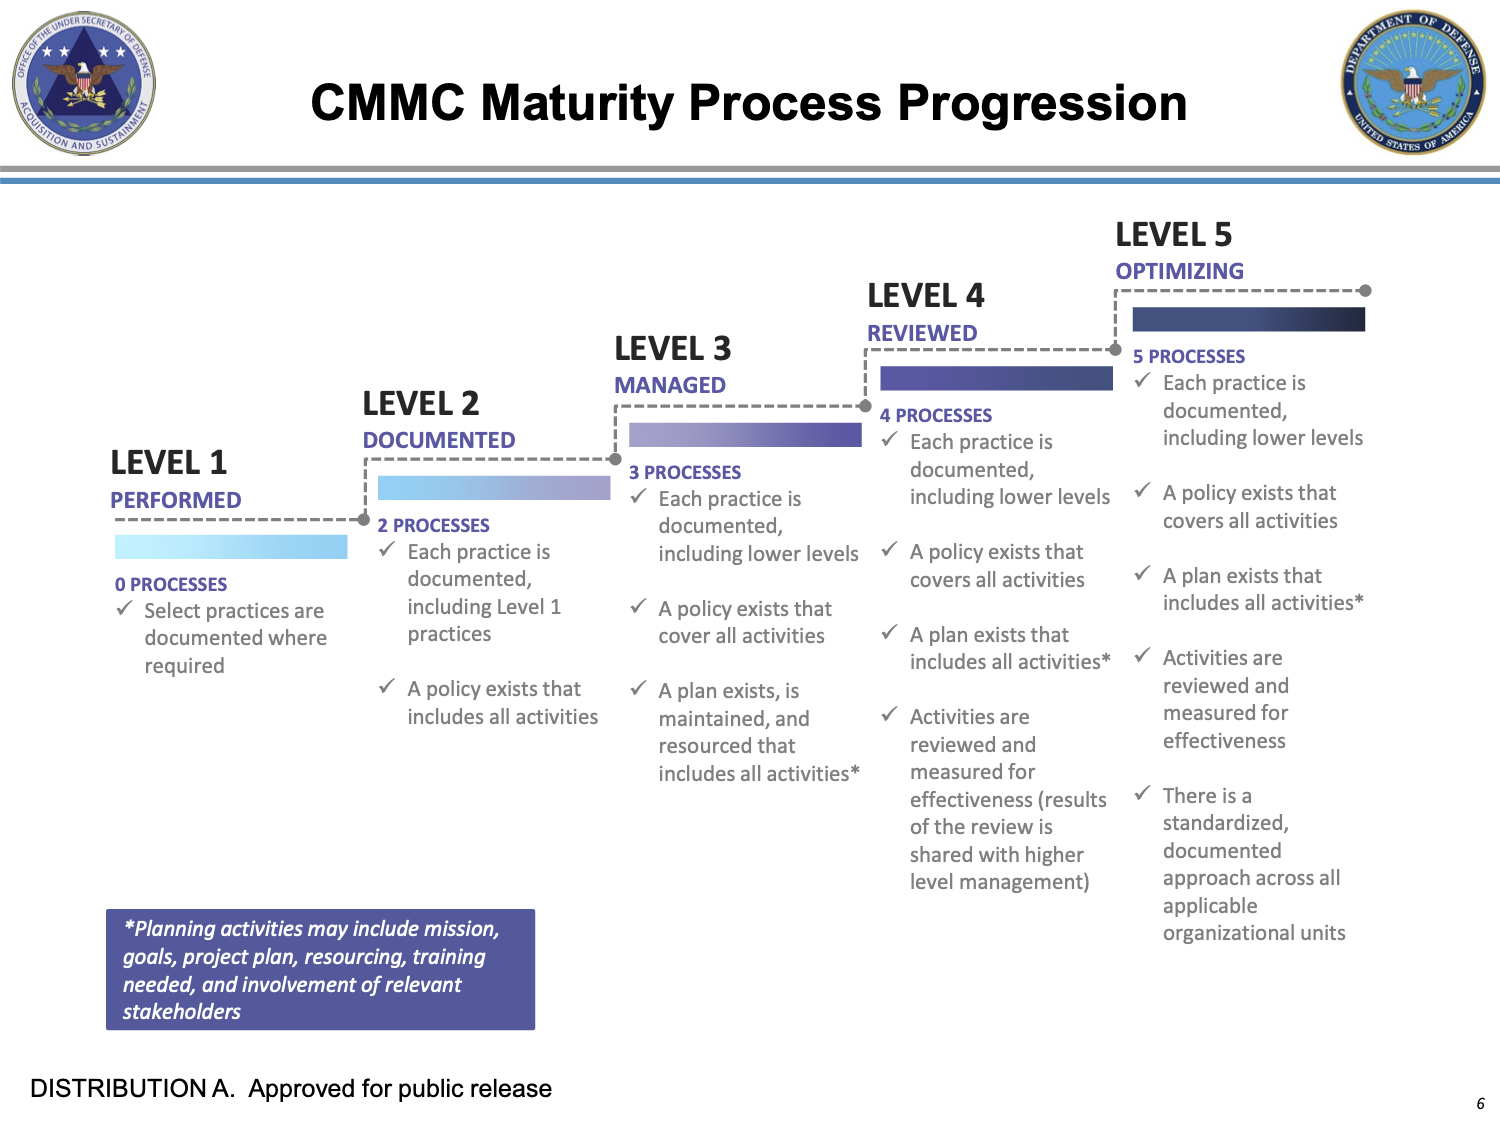 Infographic showing CMMC maturity process progression